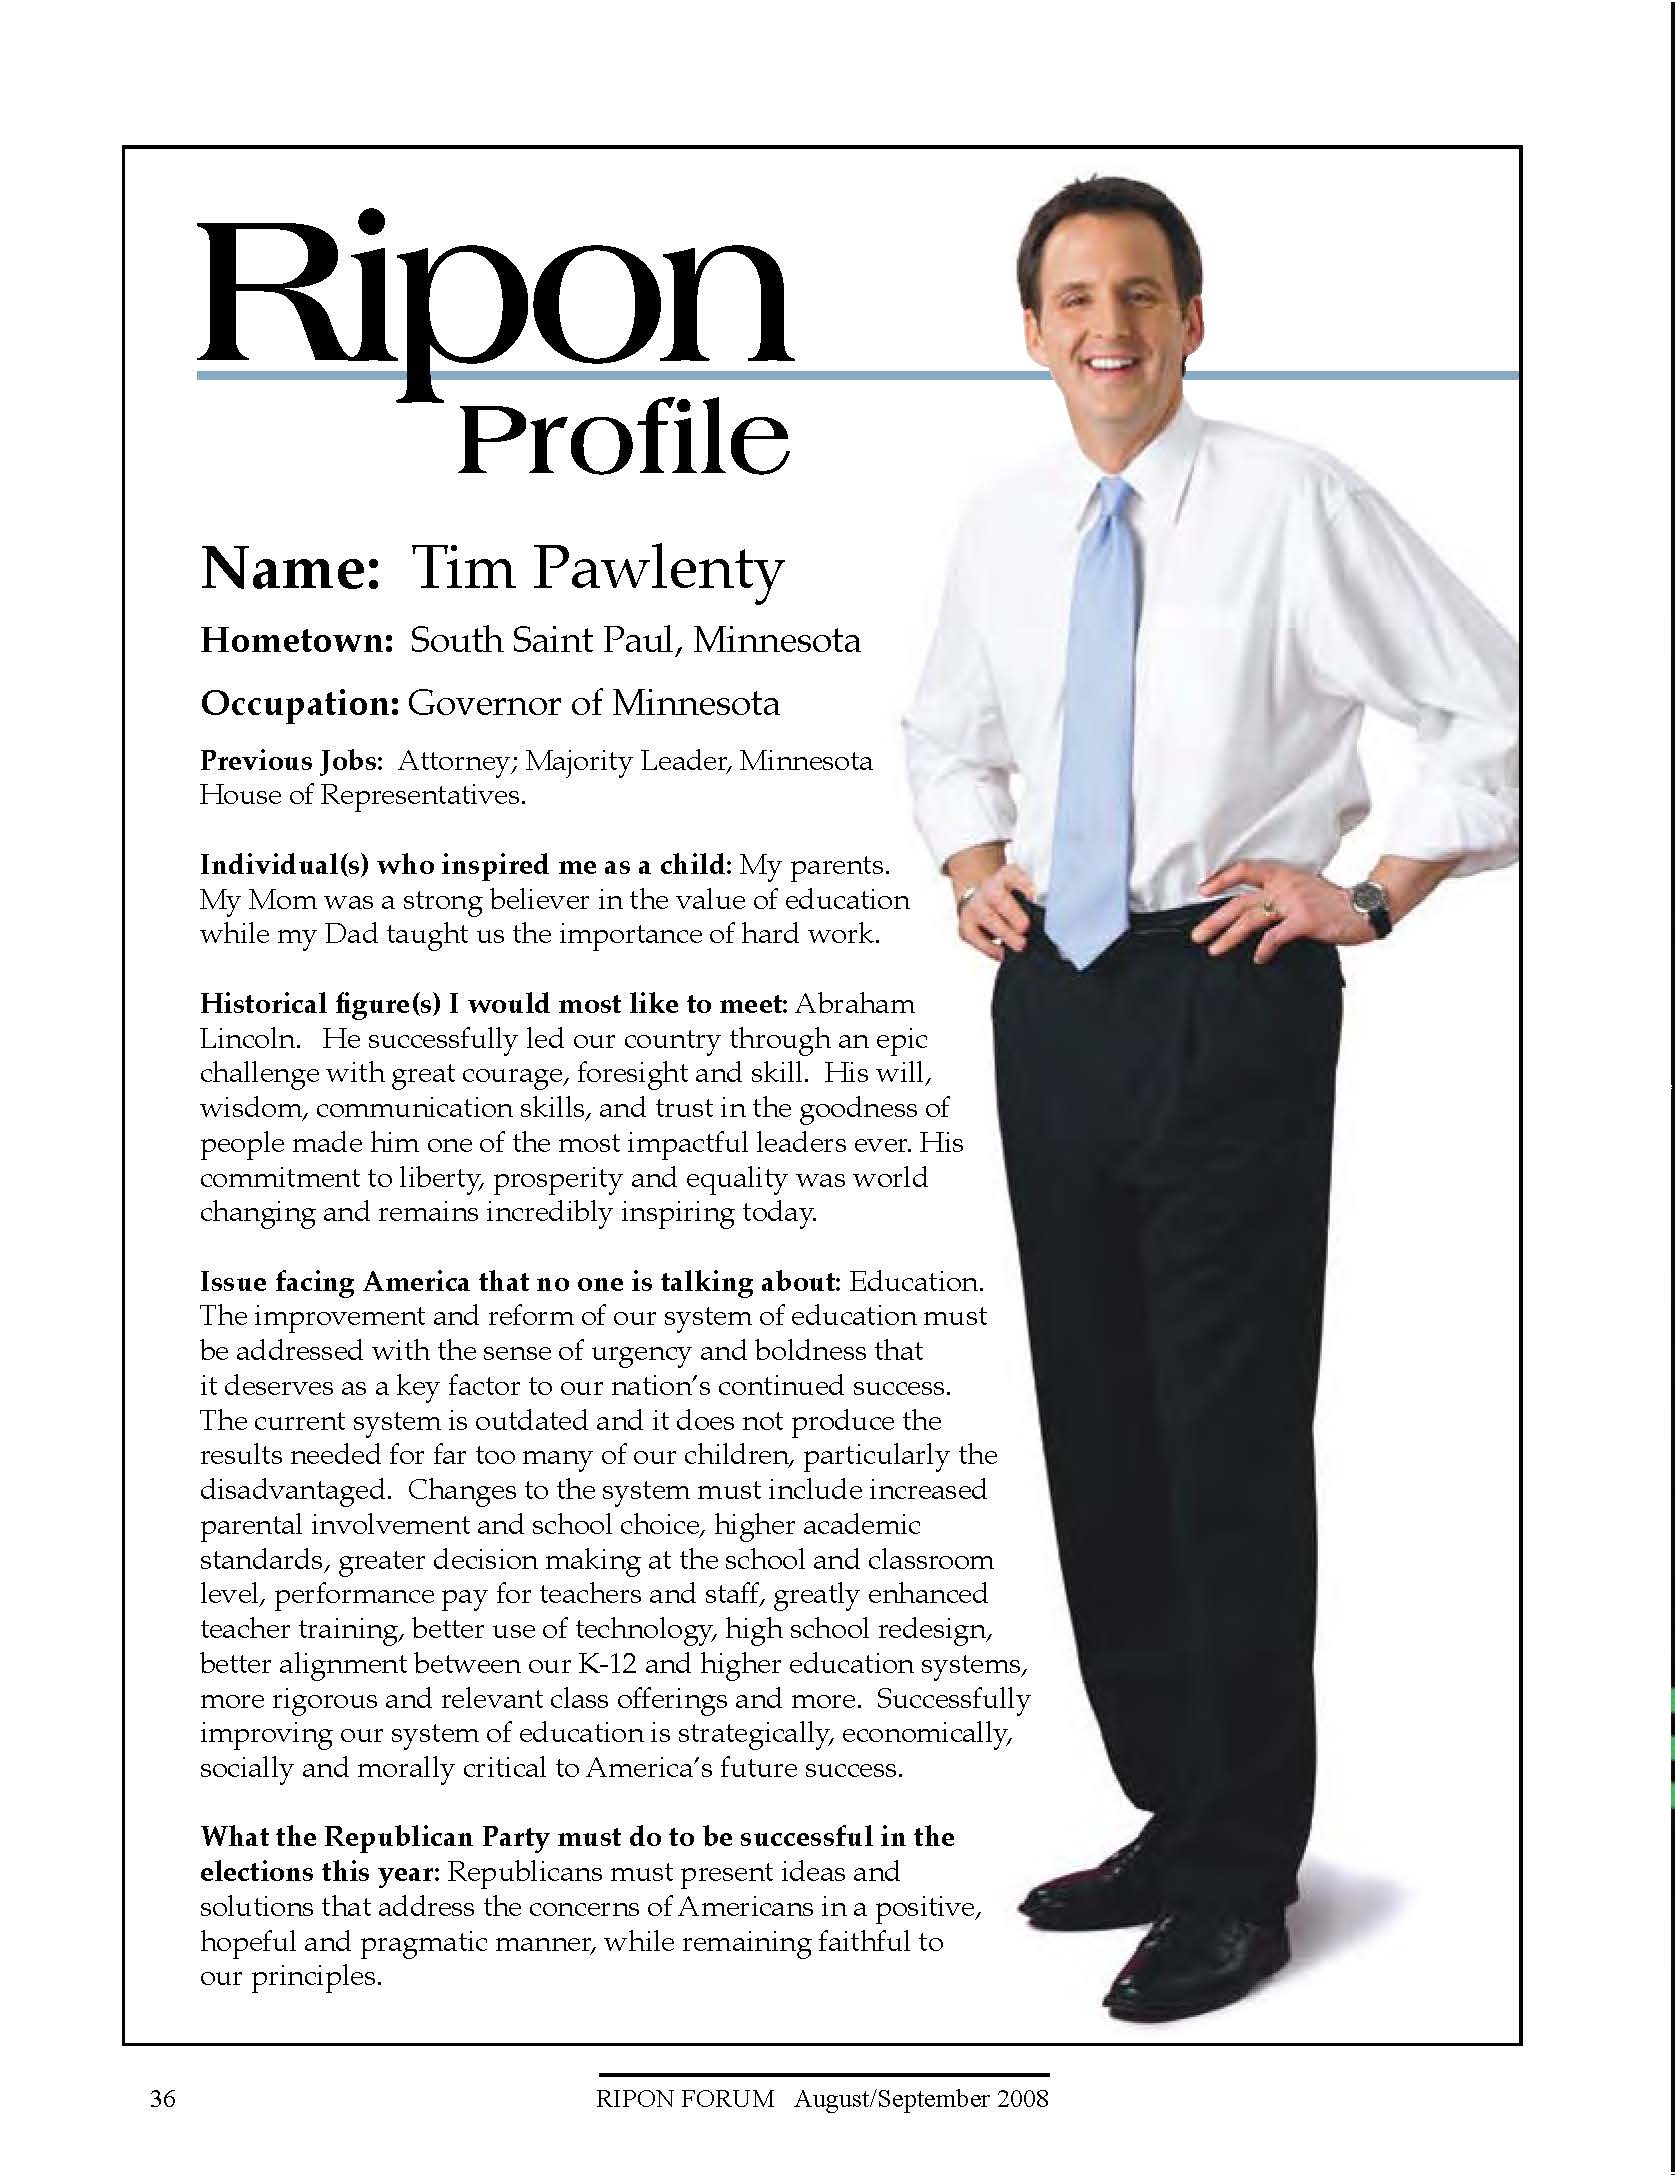 The Ripon Profile of Tim Pawlenty